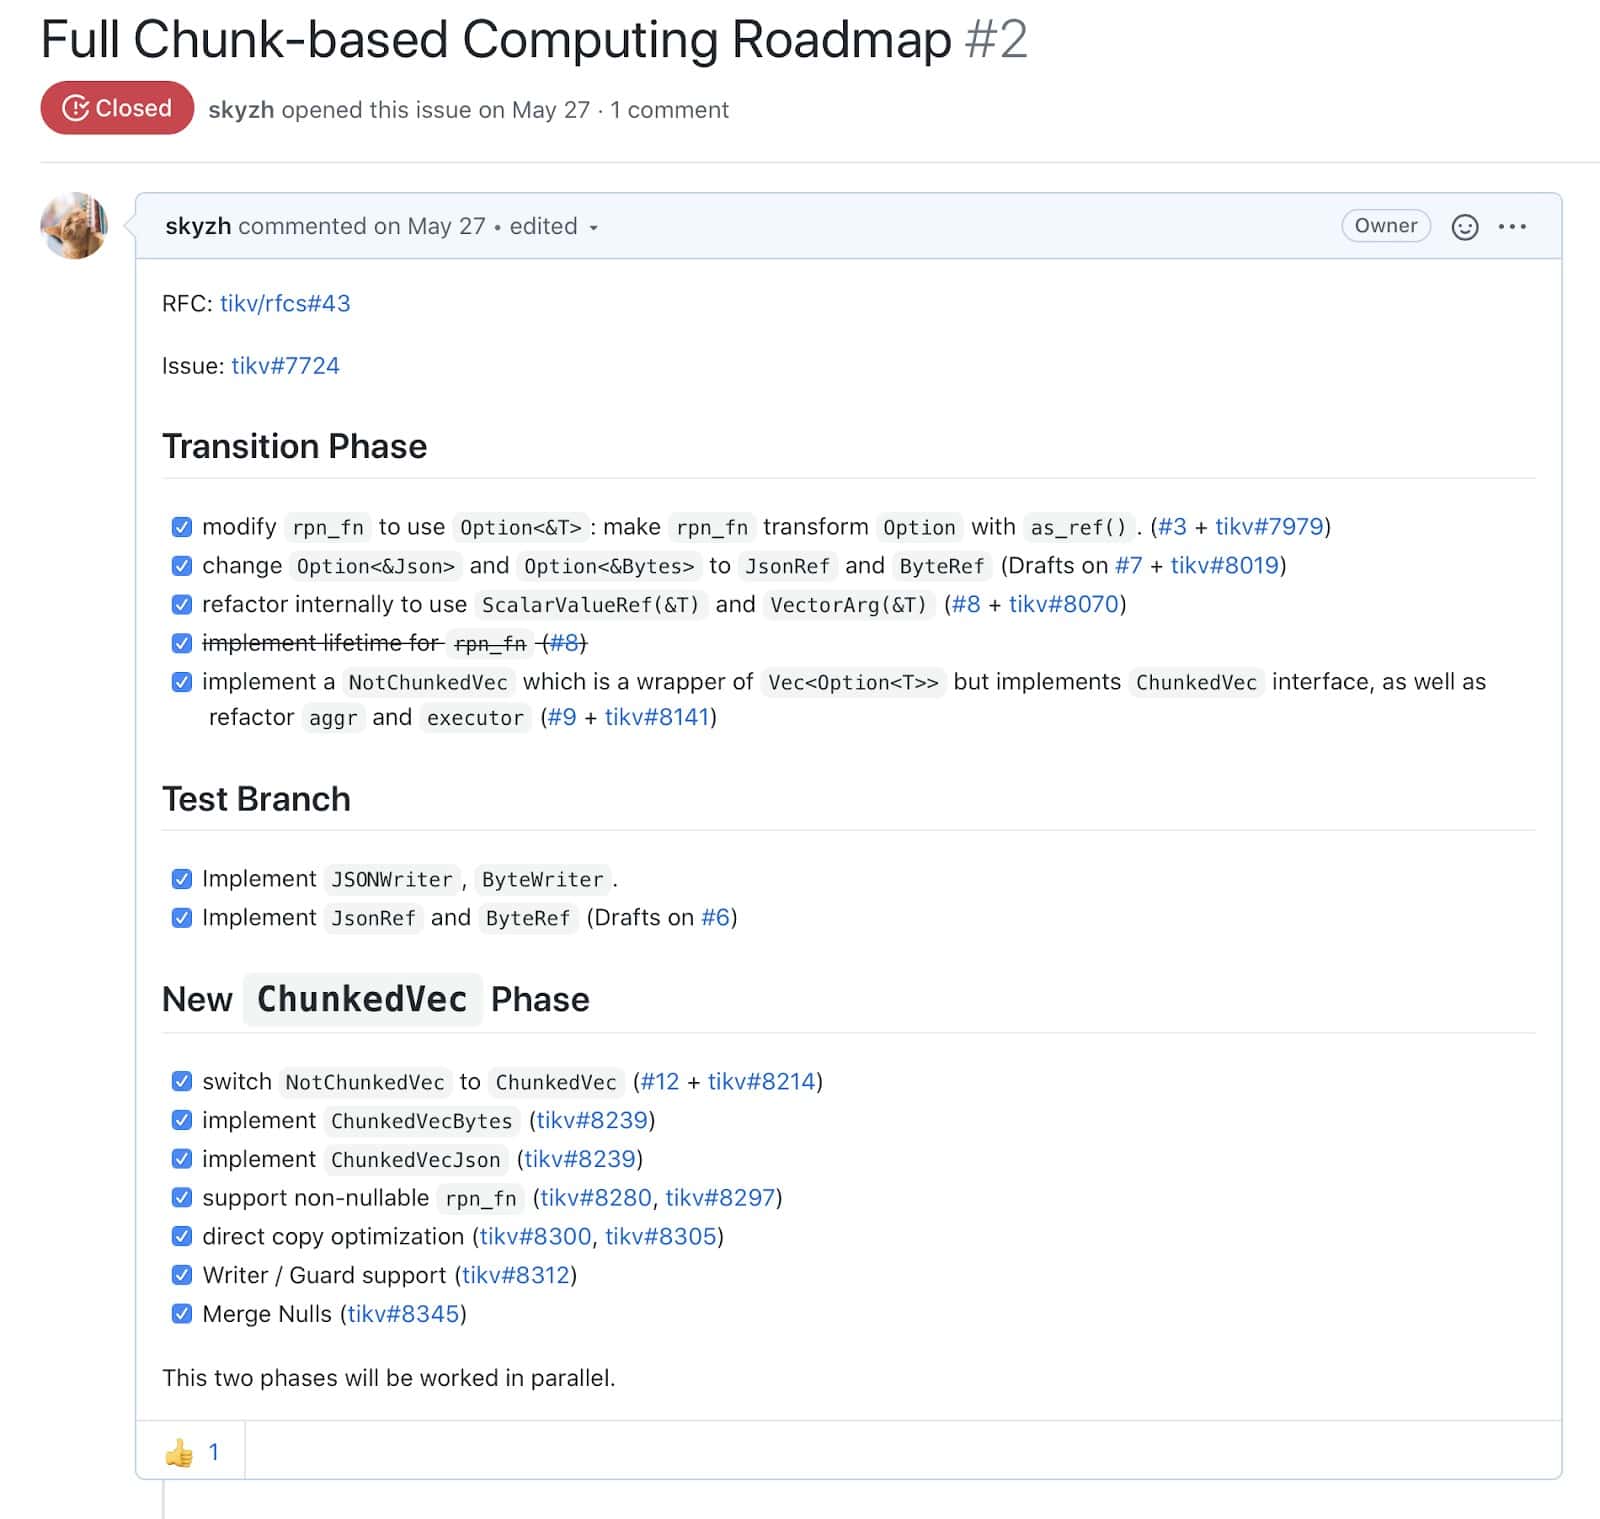 Screenshot showing Full Chunk-based Computing Roadmap #2